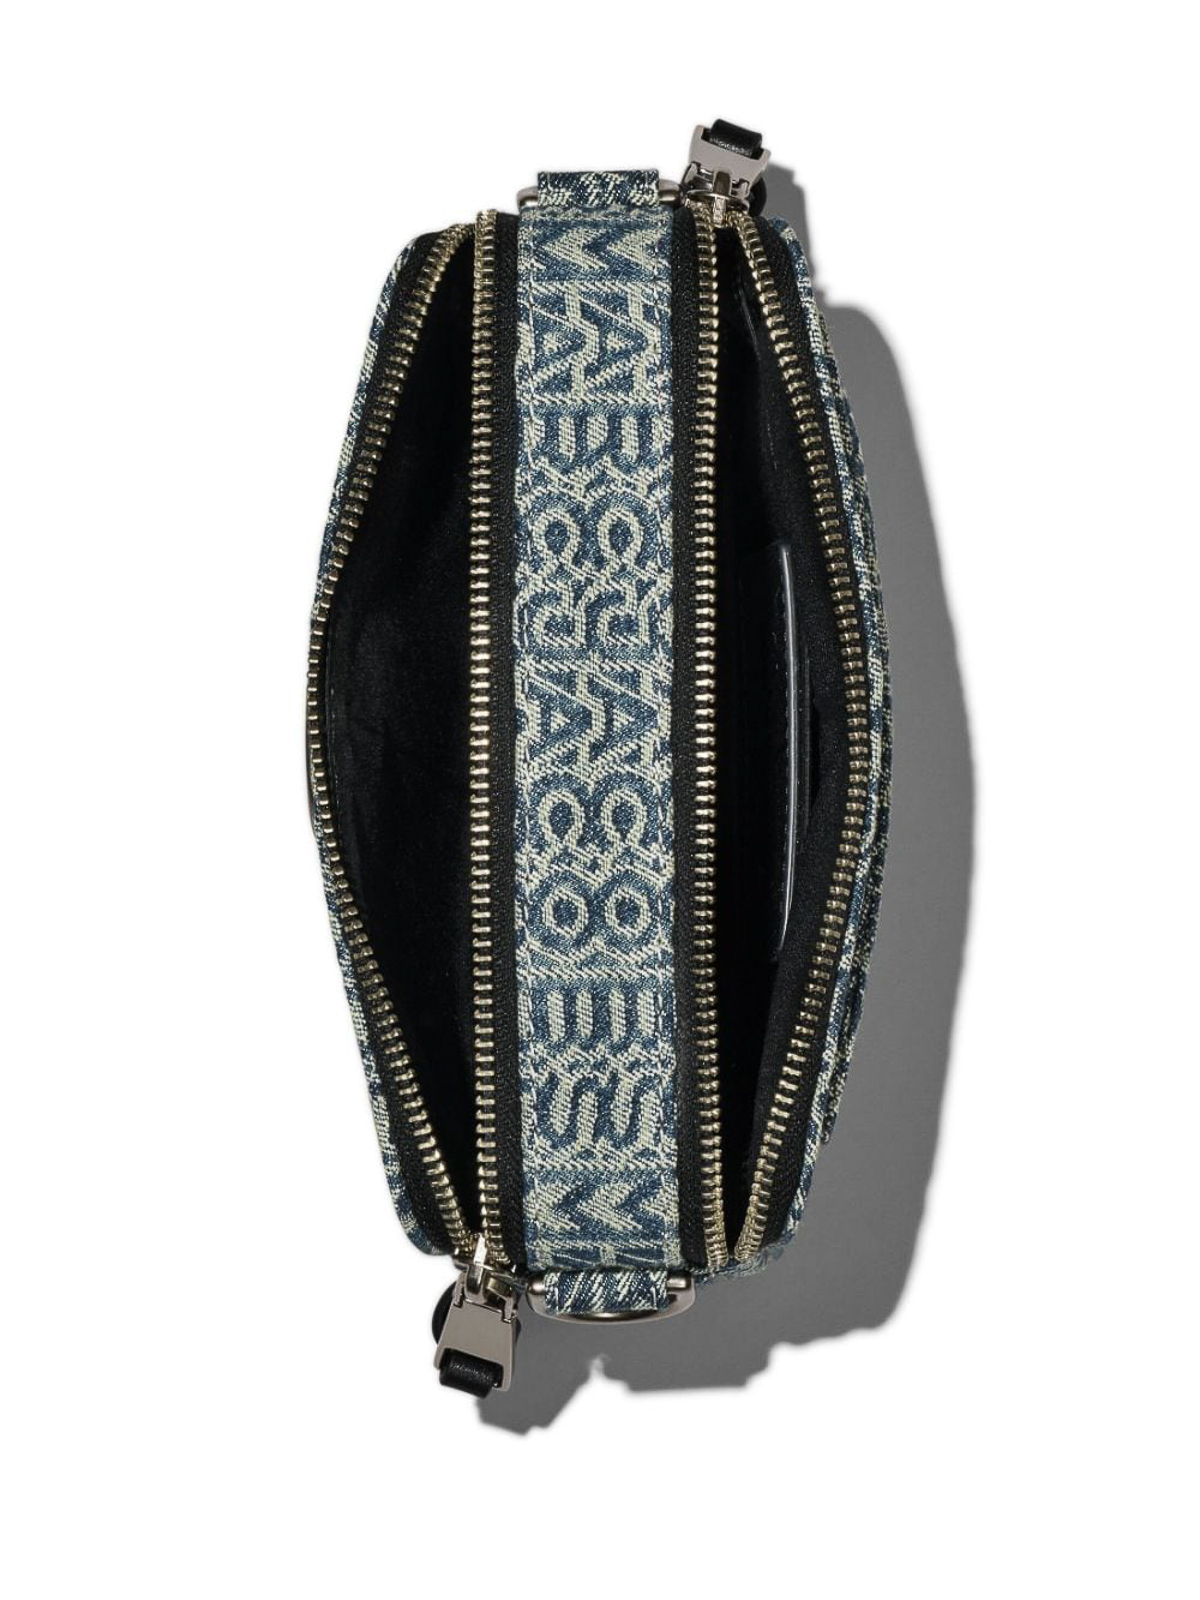 The snapshot monogram crossbody bag by Marc Jacobs